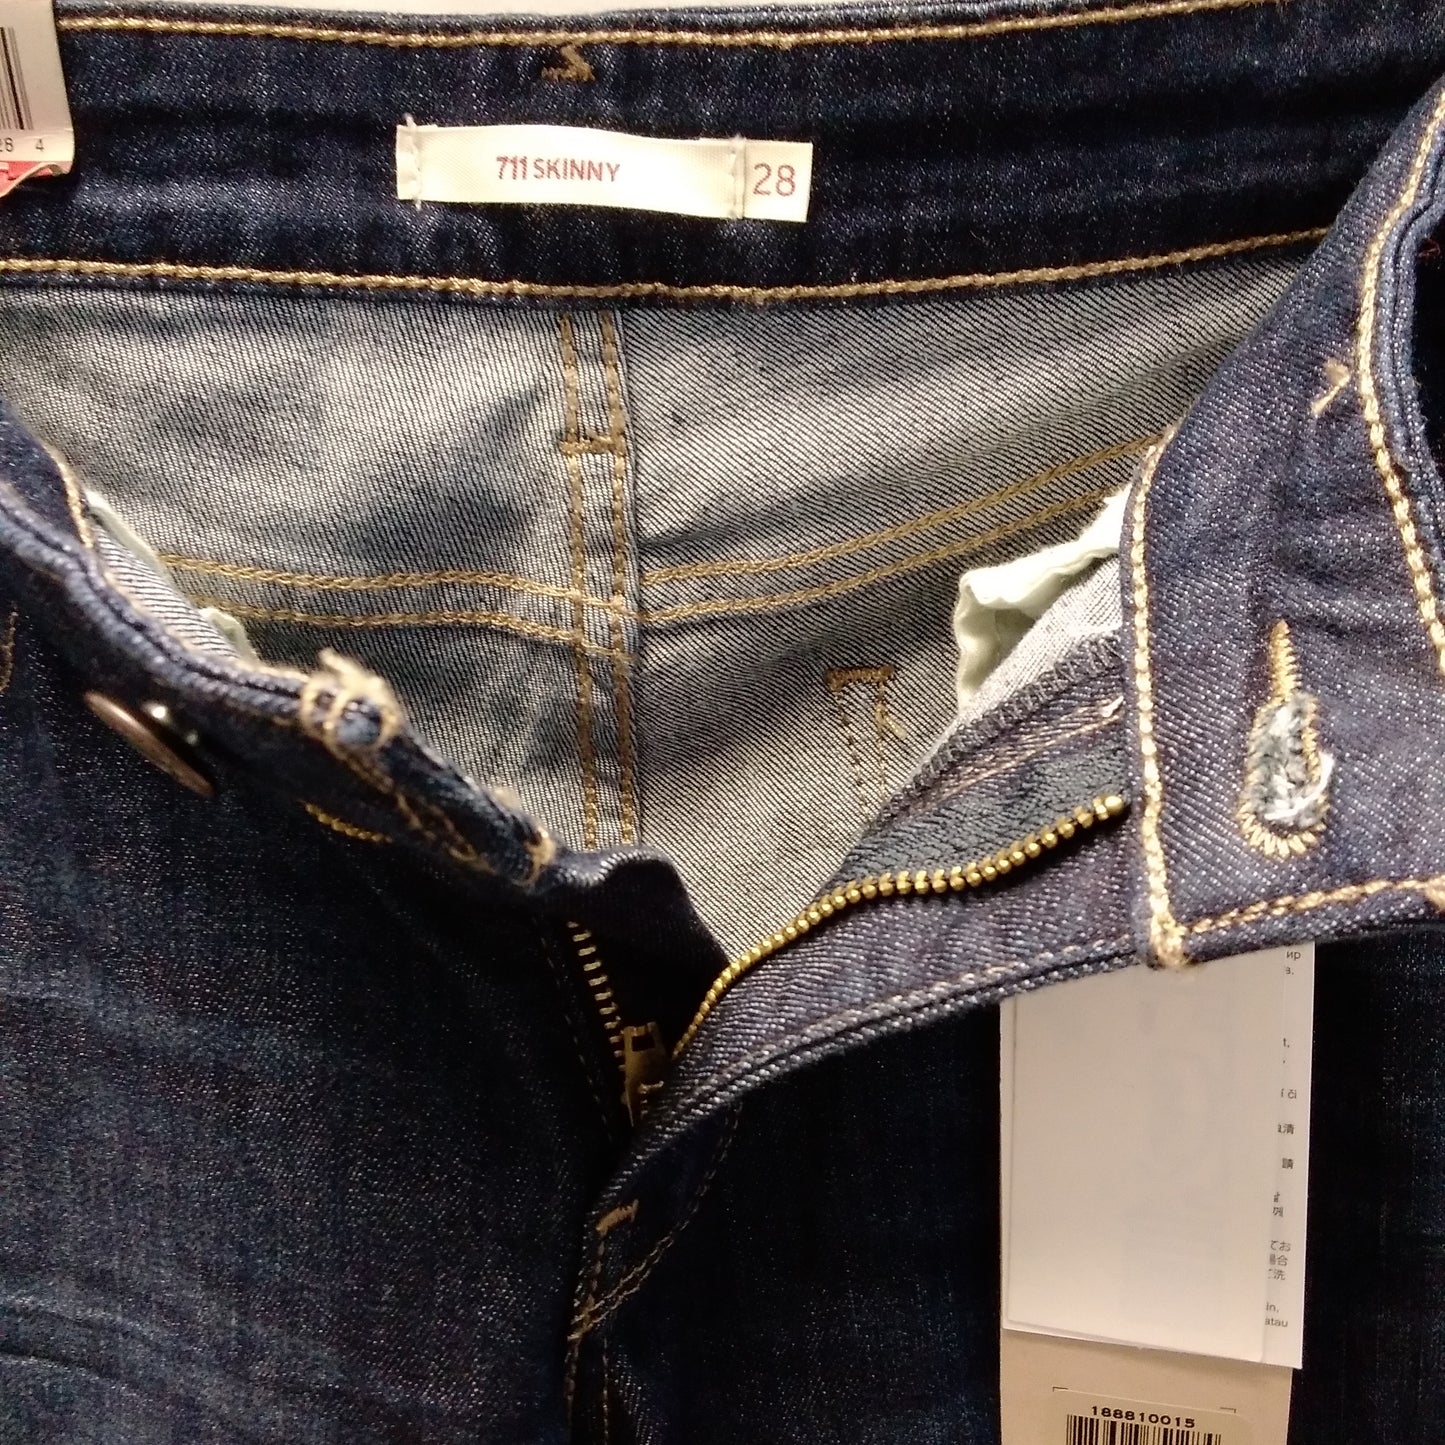 NWT - Levi's 711 Mid-Rise Skinny Jeans - 28x30